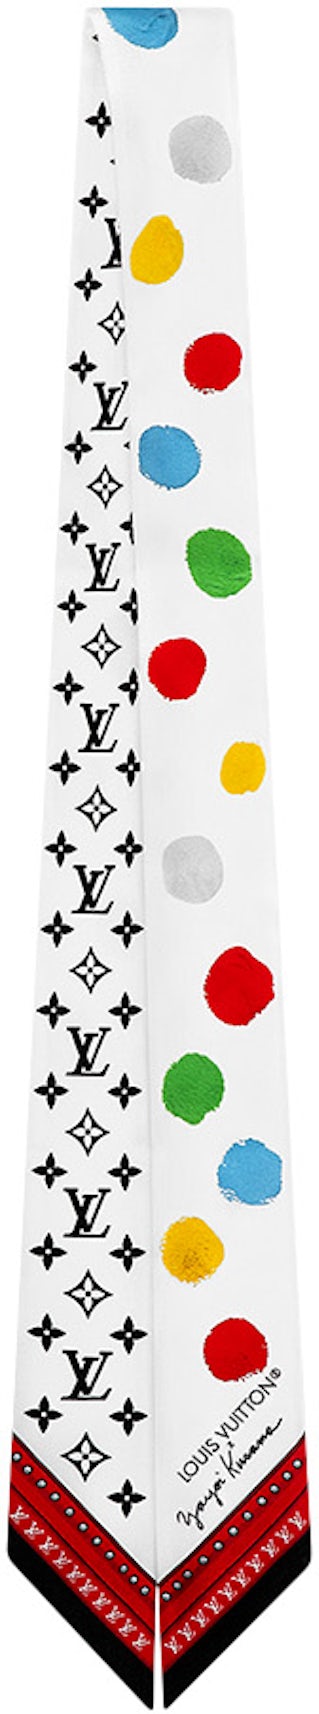 Louis Vuitton x Yayoi Kusama Infinity Dots Square 90 Red/White in Silk - US